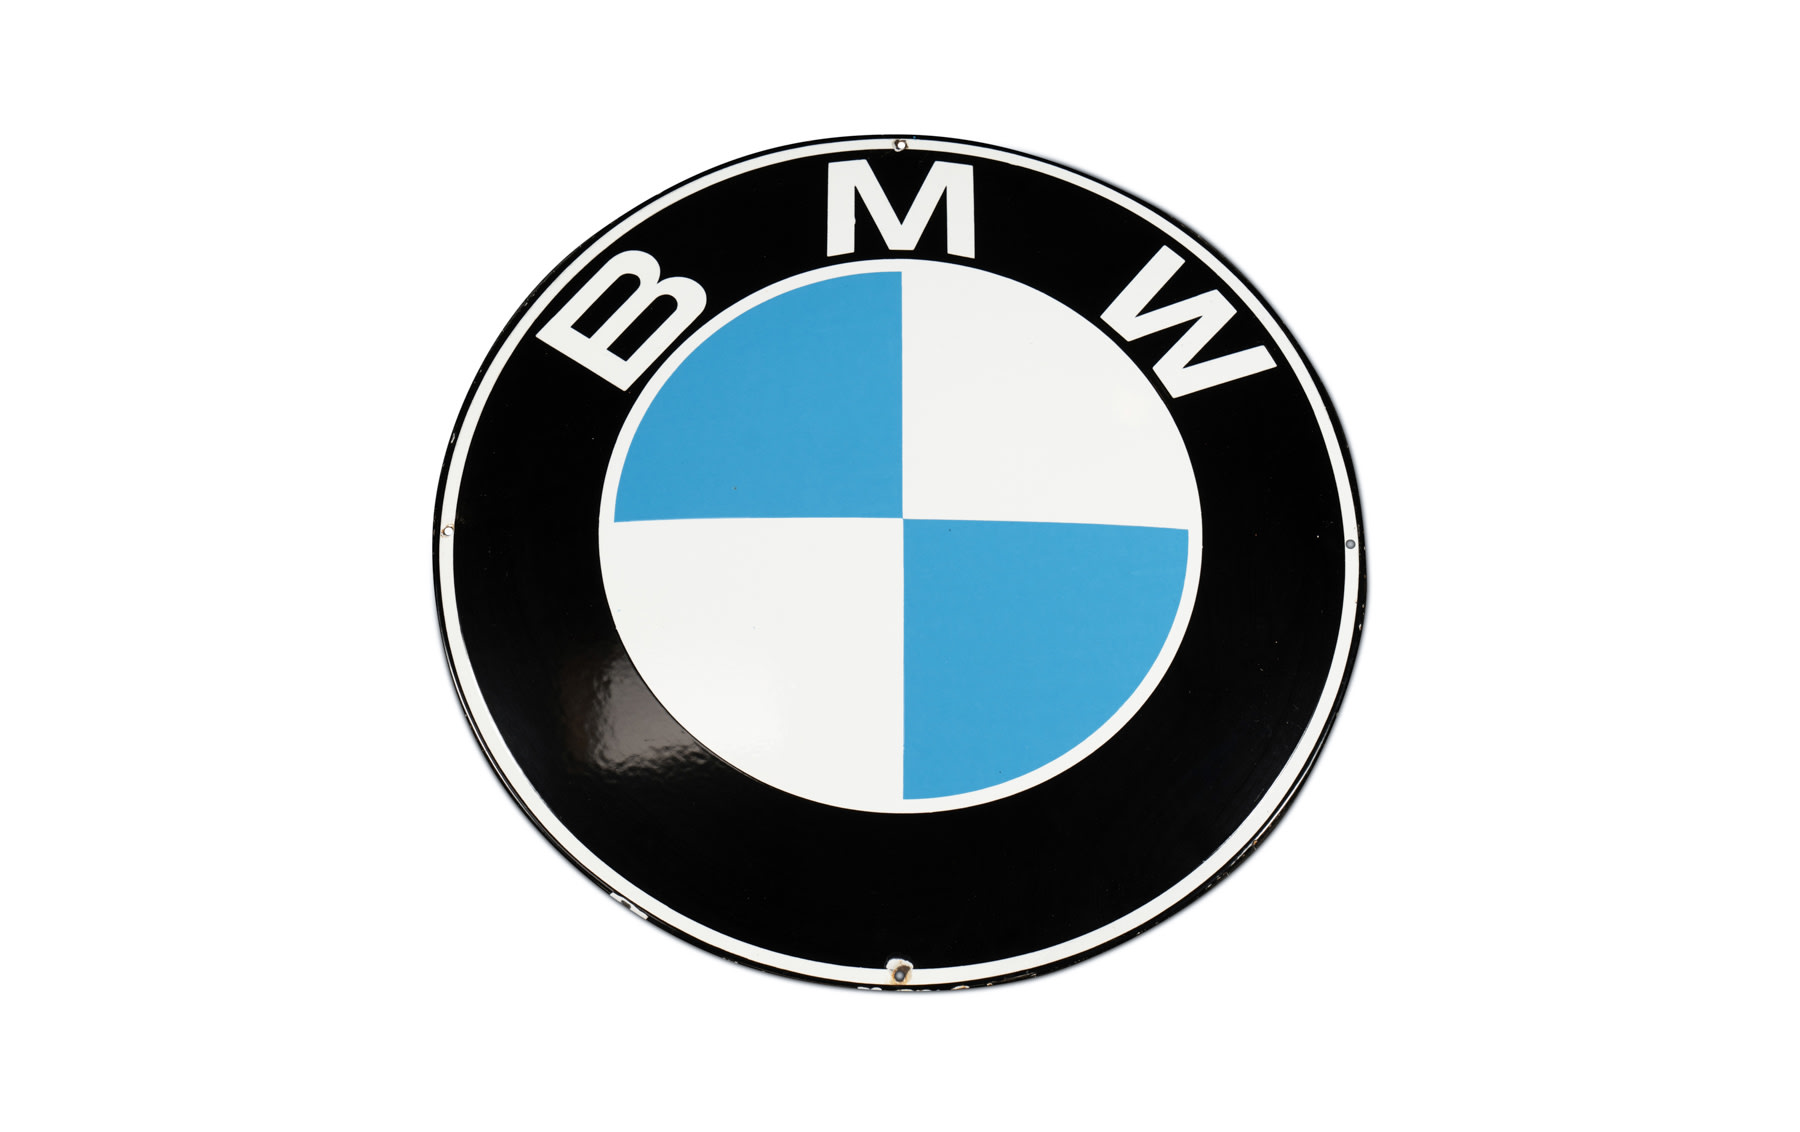 BMW Roundel Sign